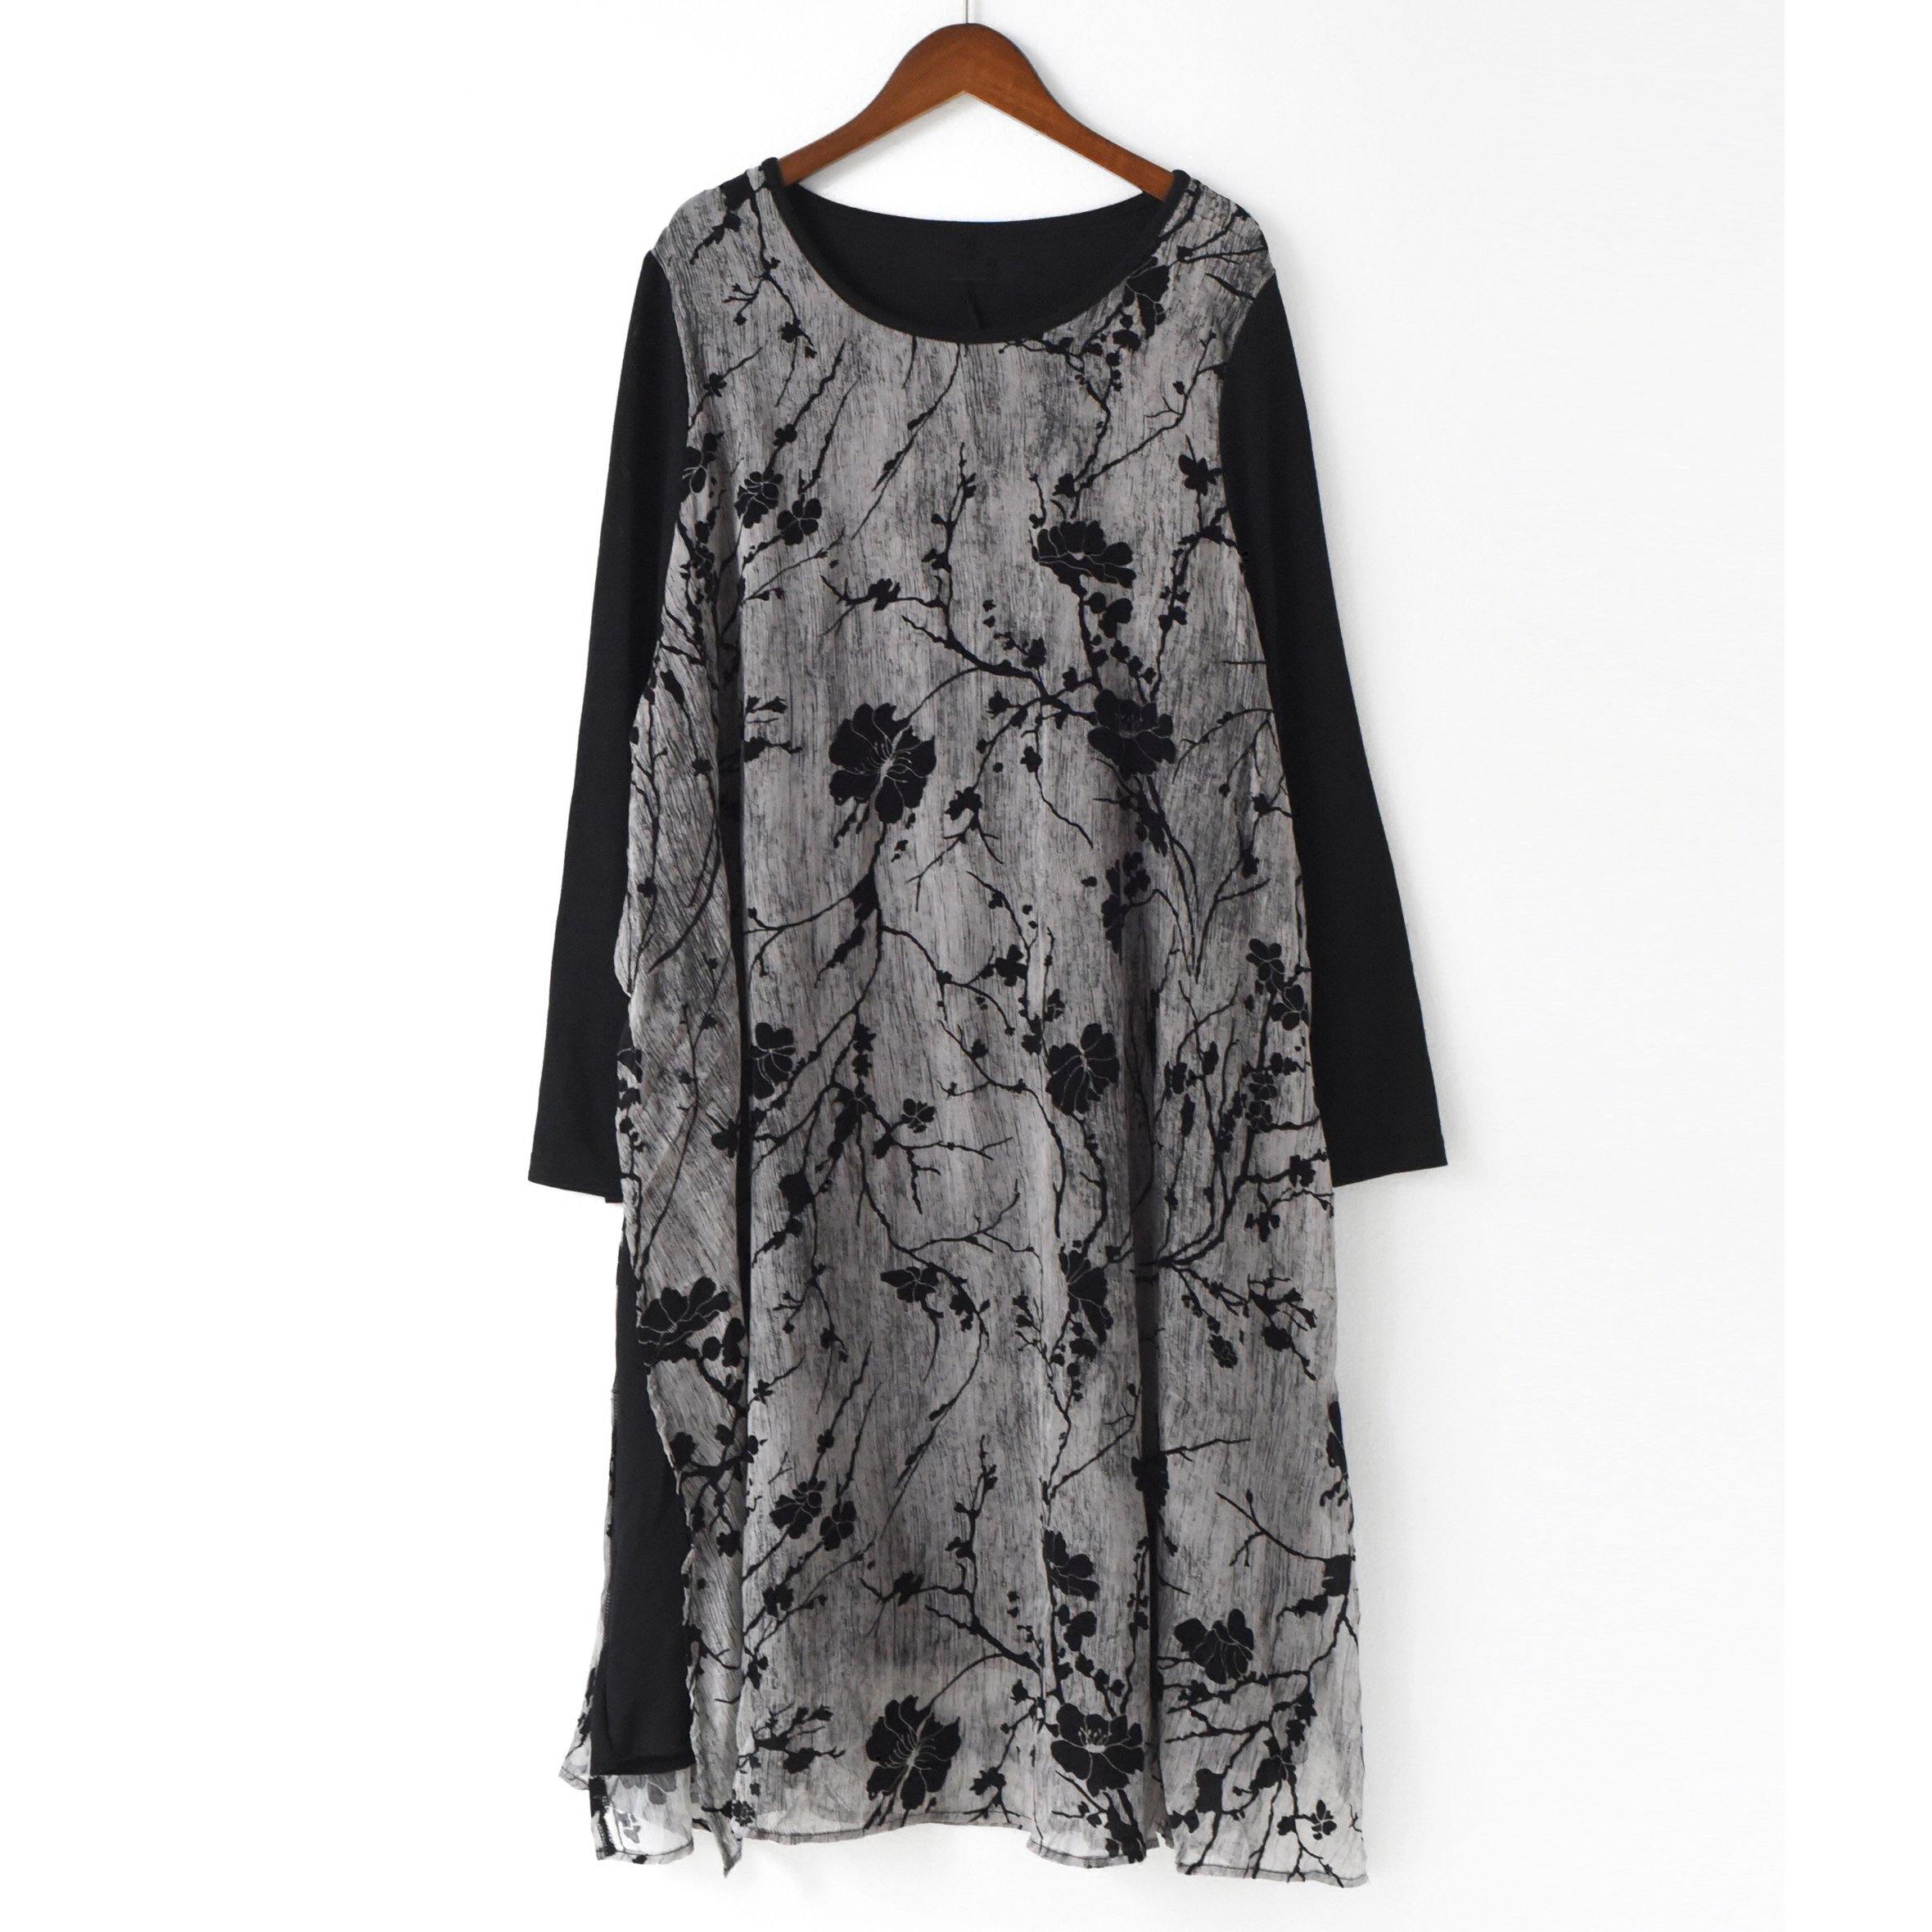 Gray Patchwork Chiffon Summer Dress Casual Plus Size Stylish Sundress Short Sleeve Maxi Dress - Omychic